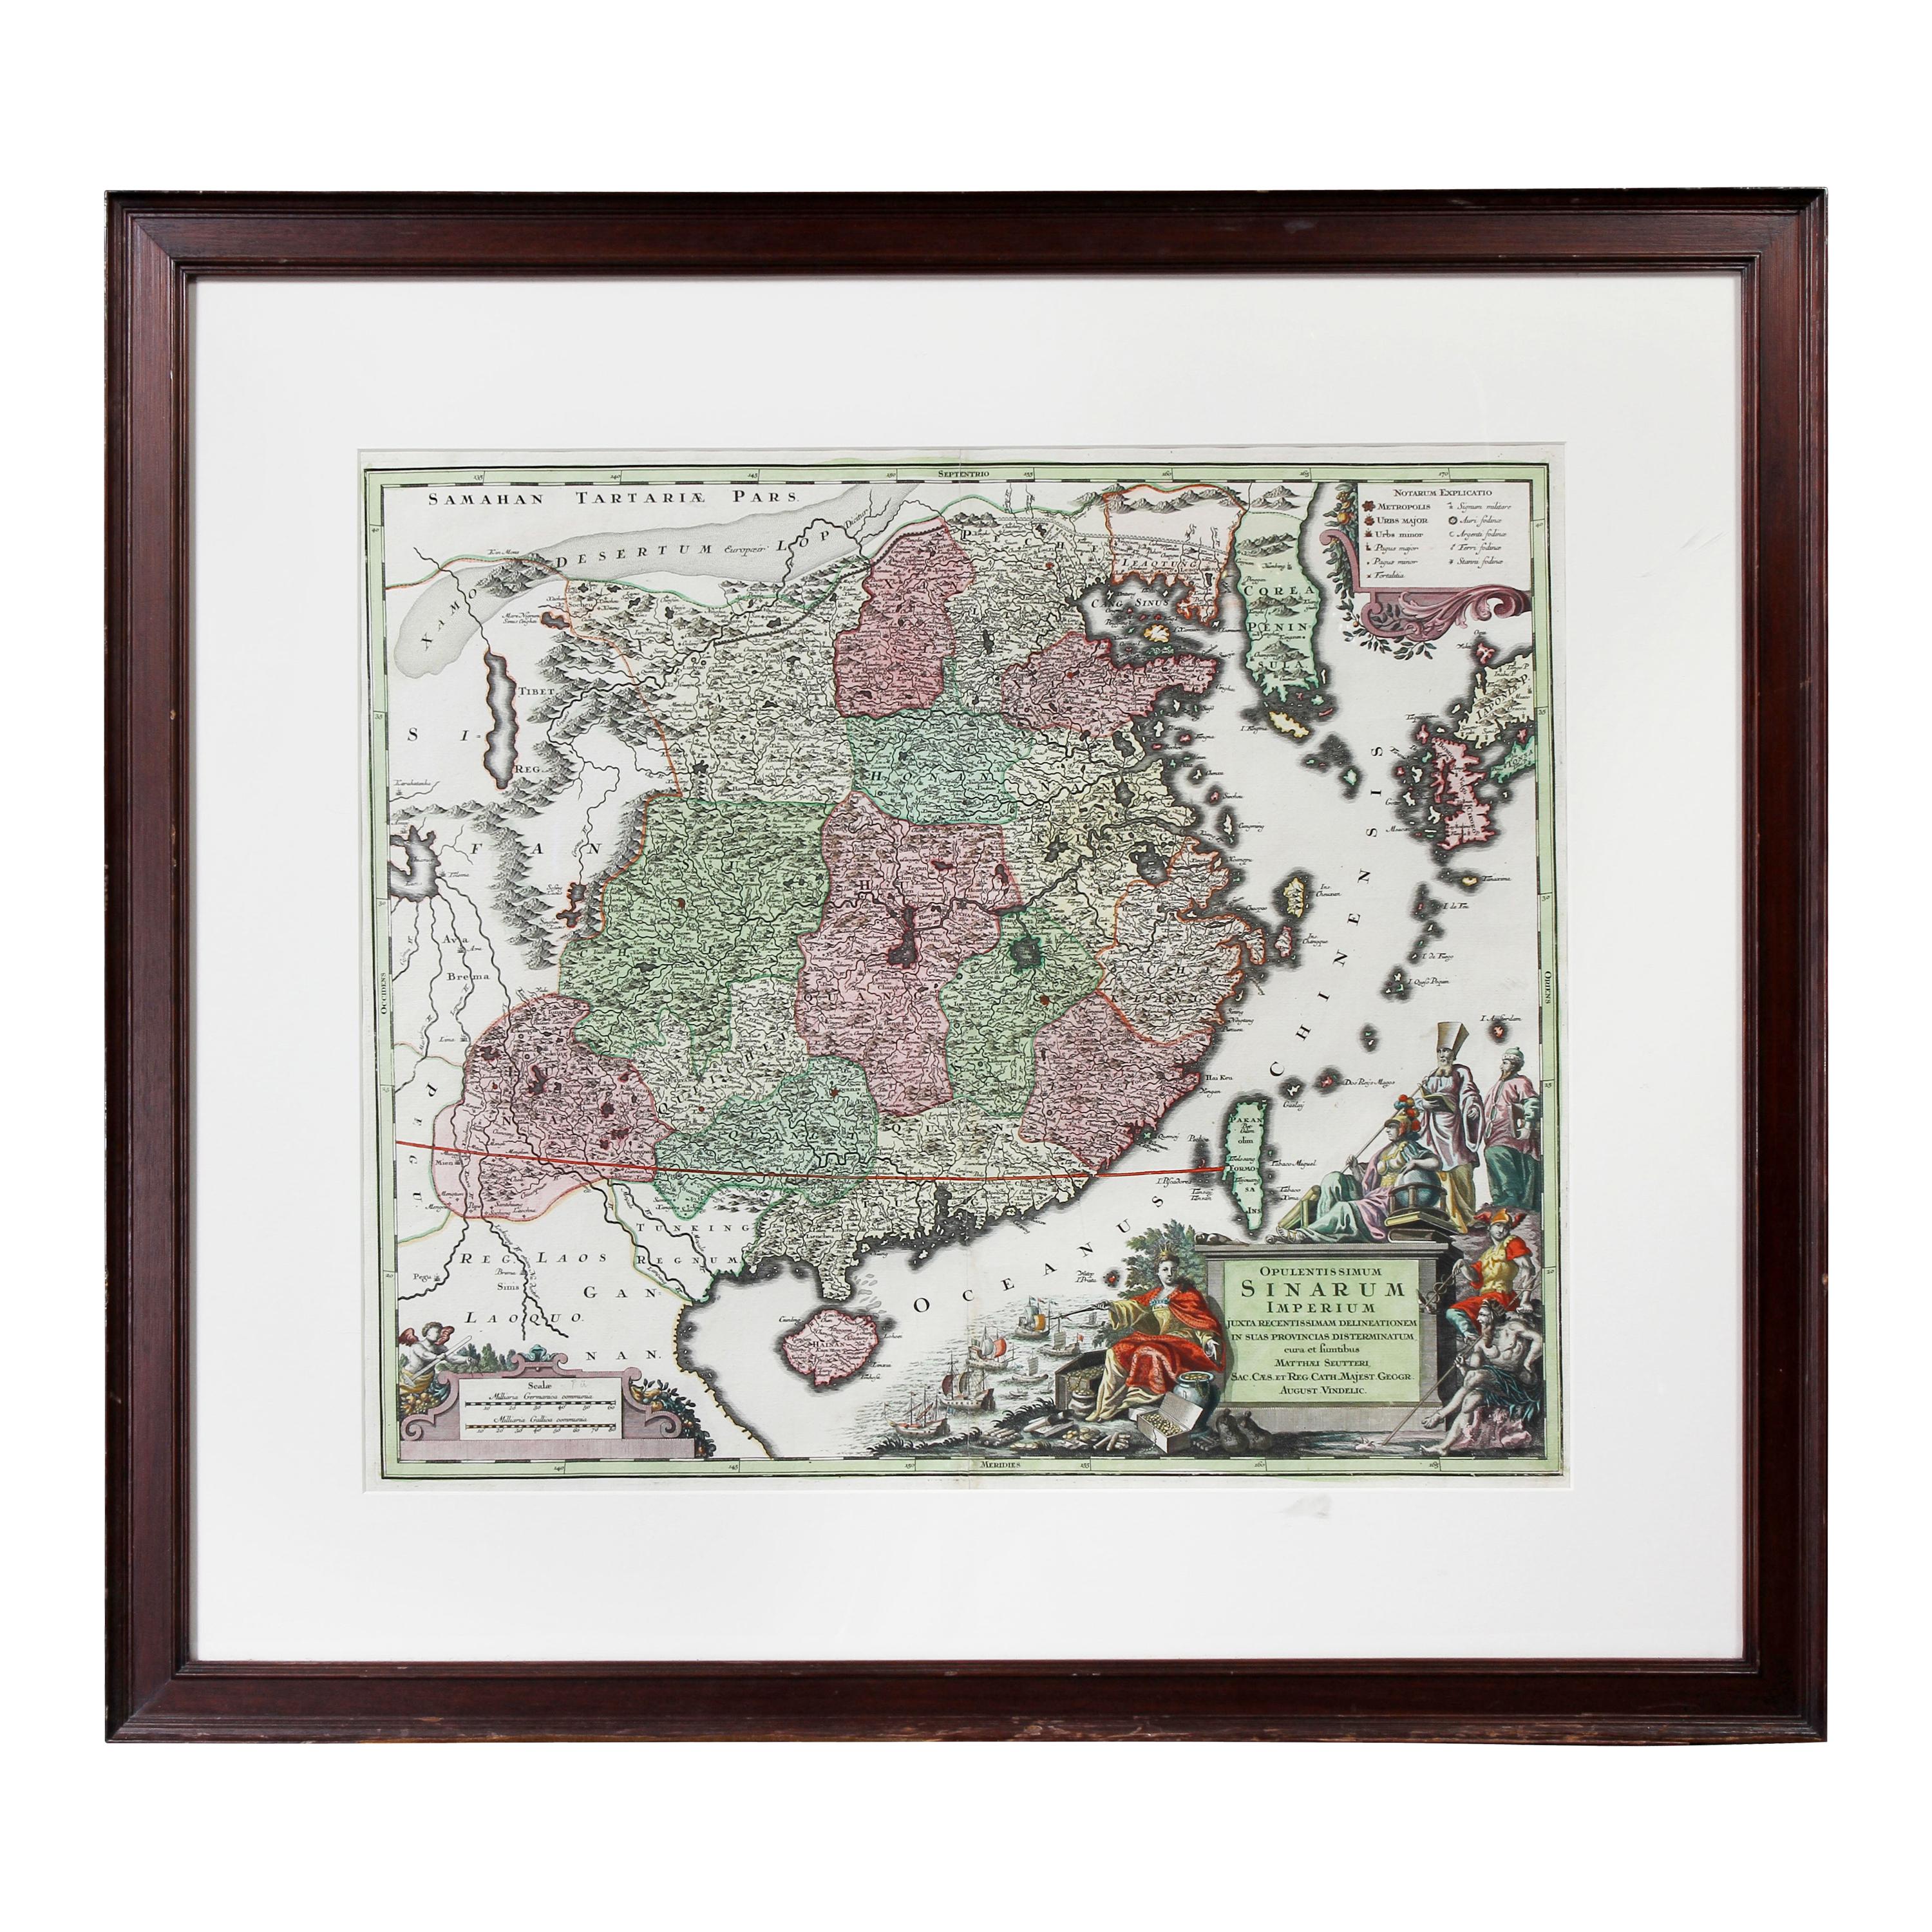 Framed Handcolored Map of Asia by Matthaus Seutter